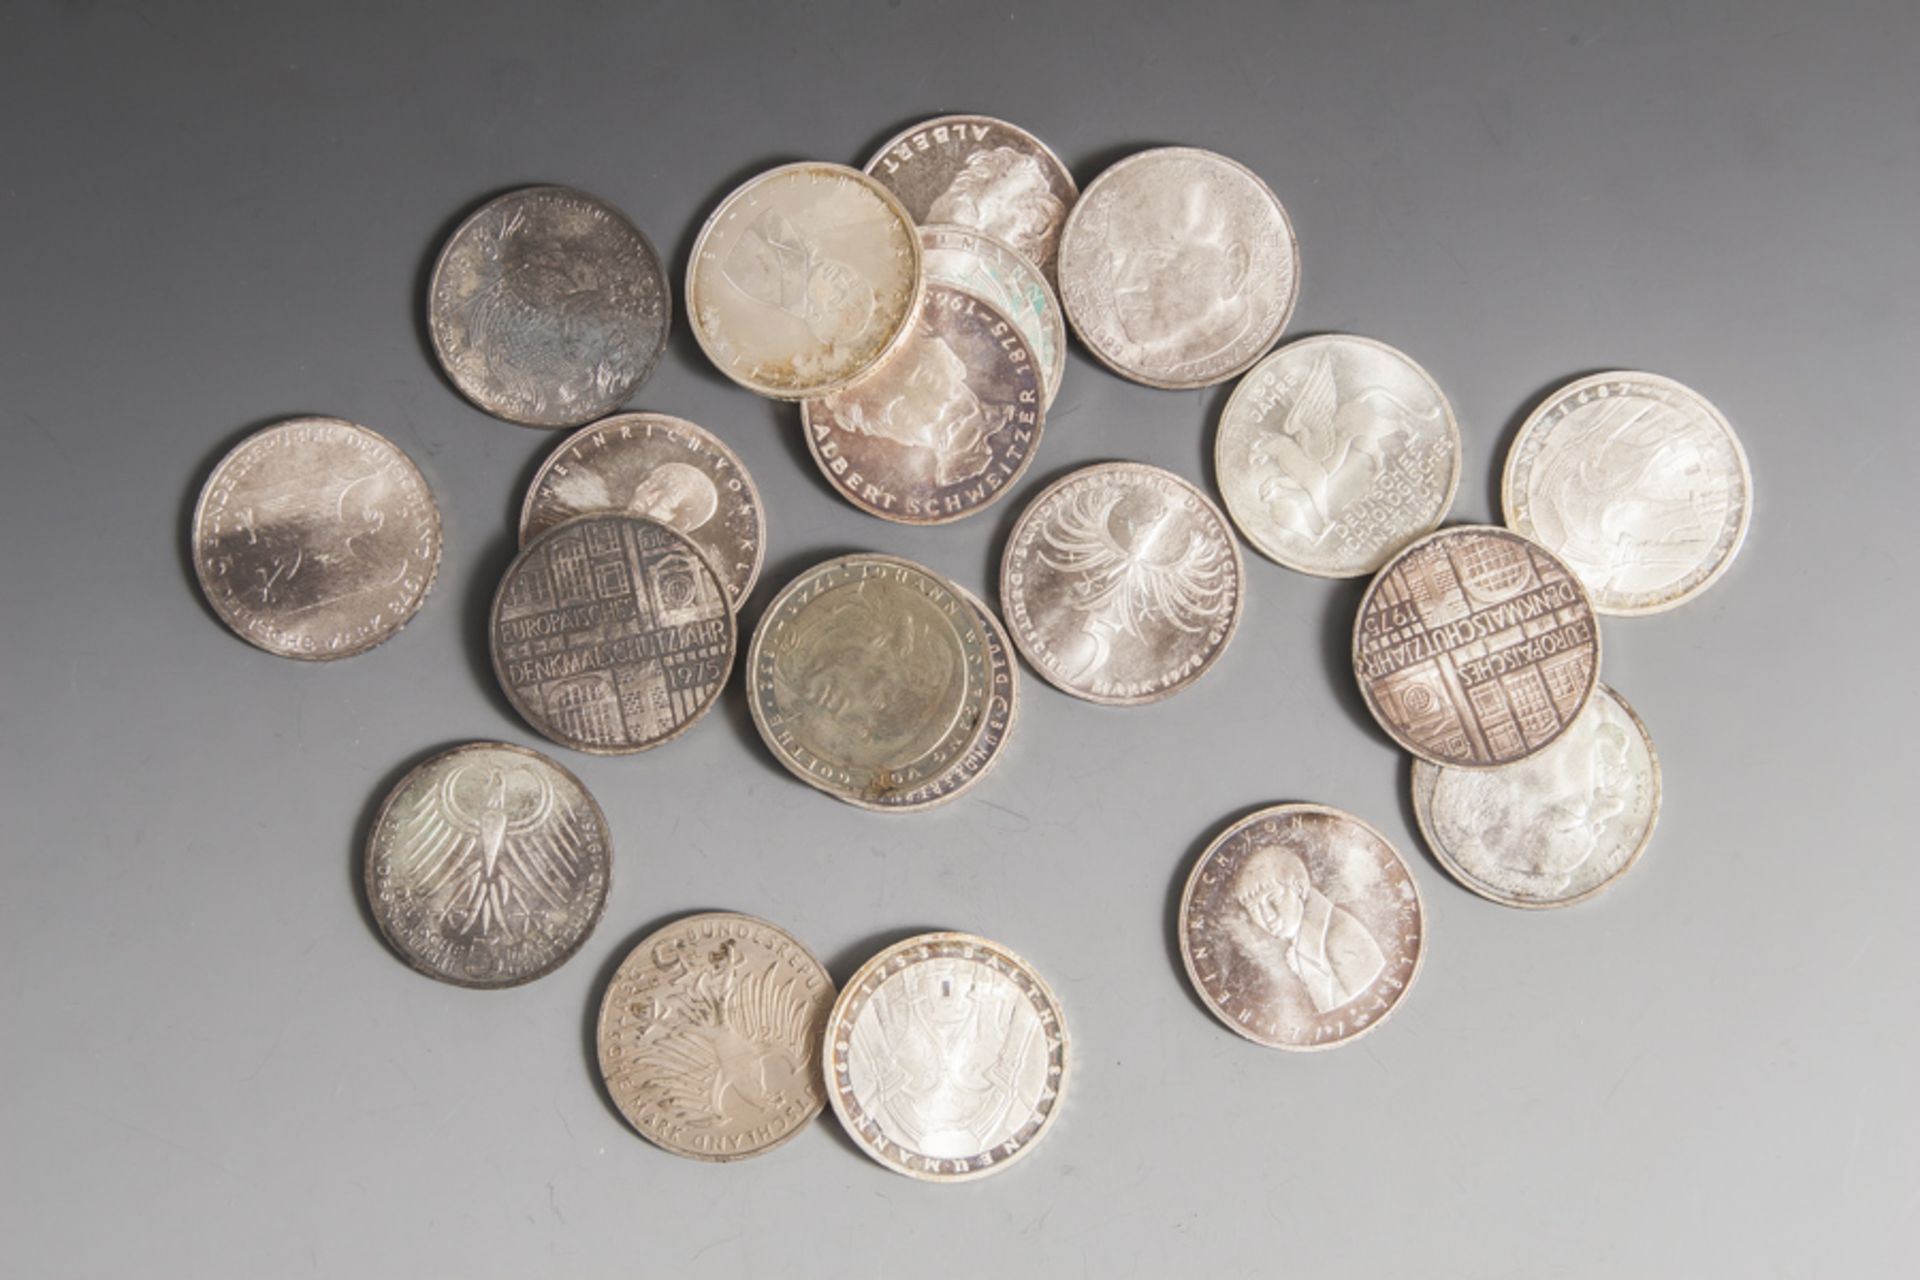 Konvolut 5 DM Sondermünzen, BRD, 20 Stück, 4x Kleist, 2x Schweitzer, 2x Stresemann 2xEbert, 1x